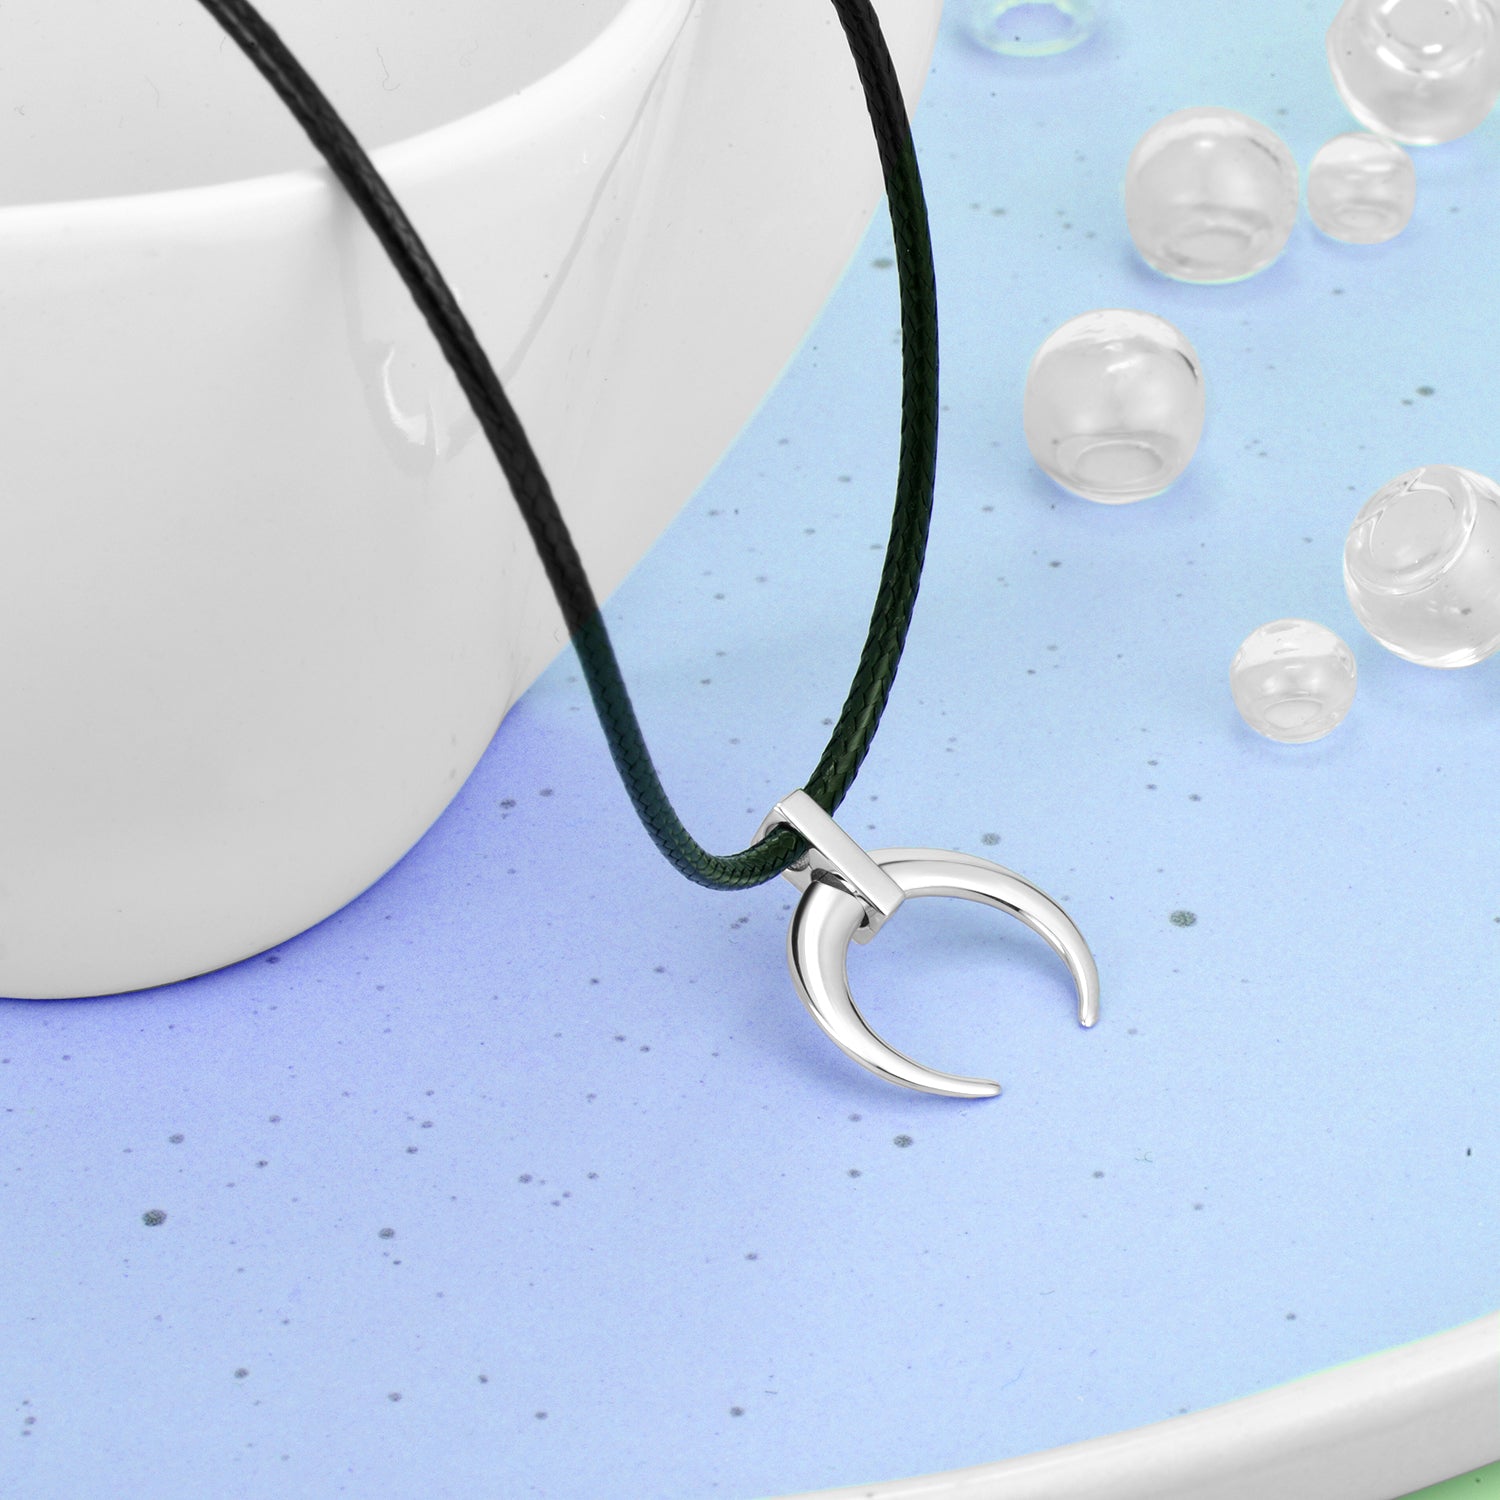 Half Crescent Moon Pendant Necklace For Man Jewelry Design